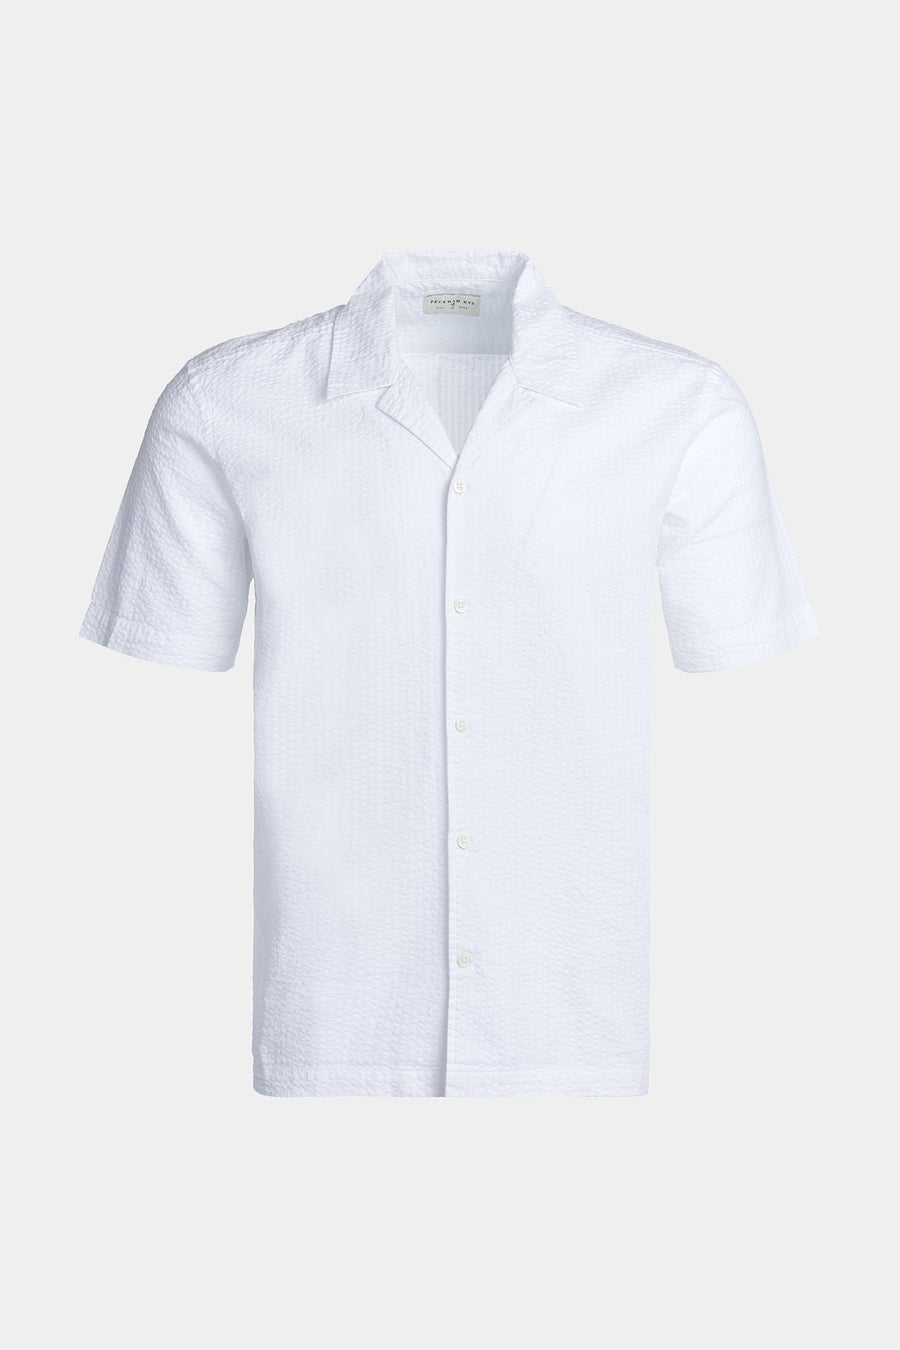 Casual Revere Collar Seersucker Short Sleeve Shirt in Bright White